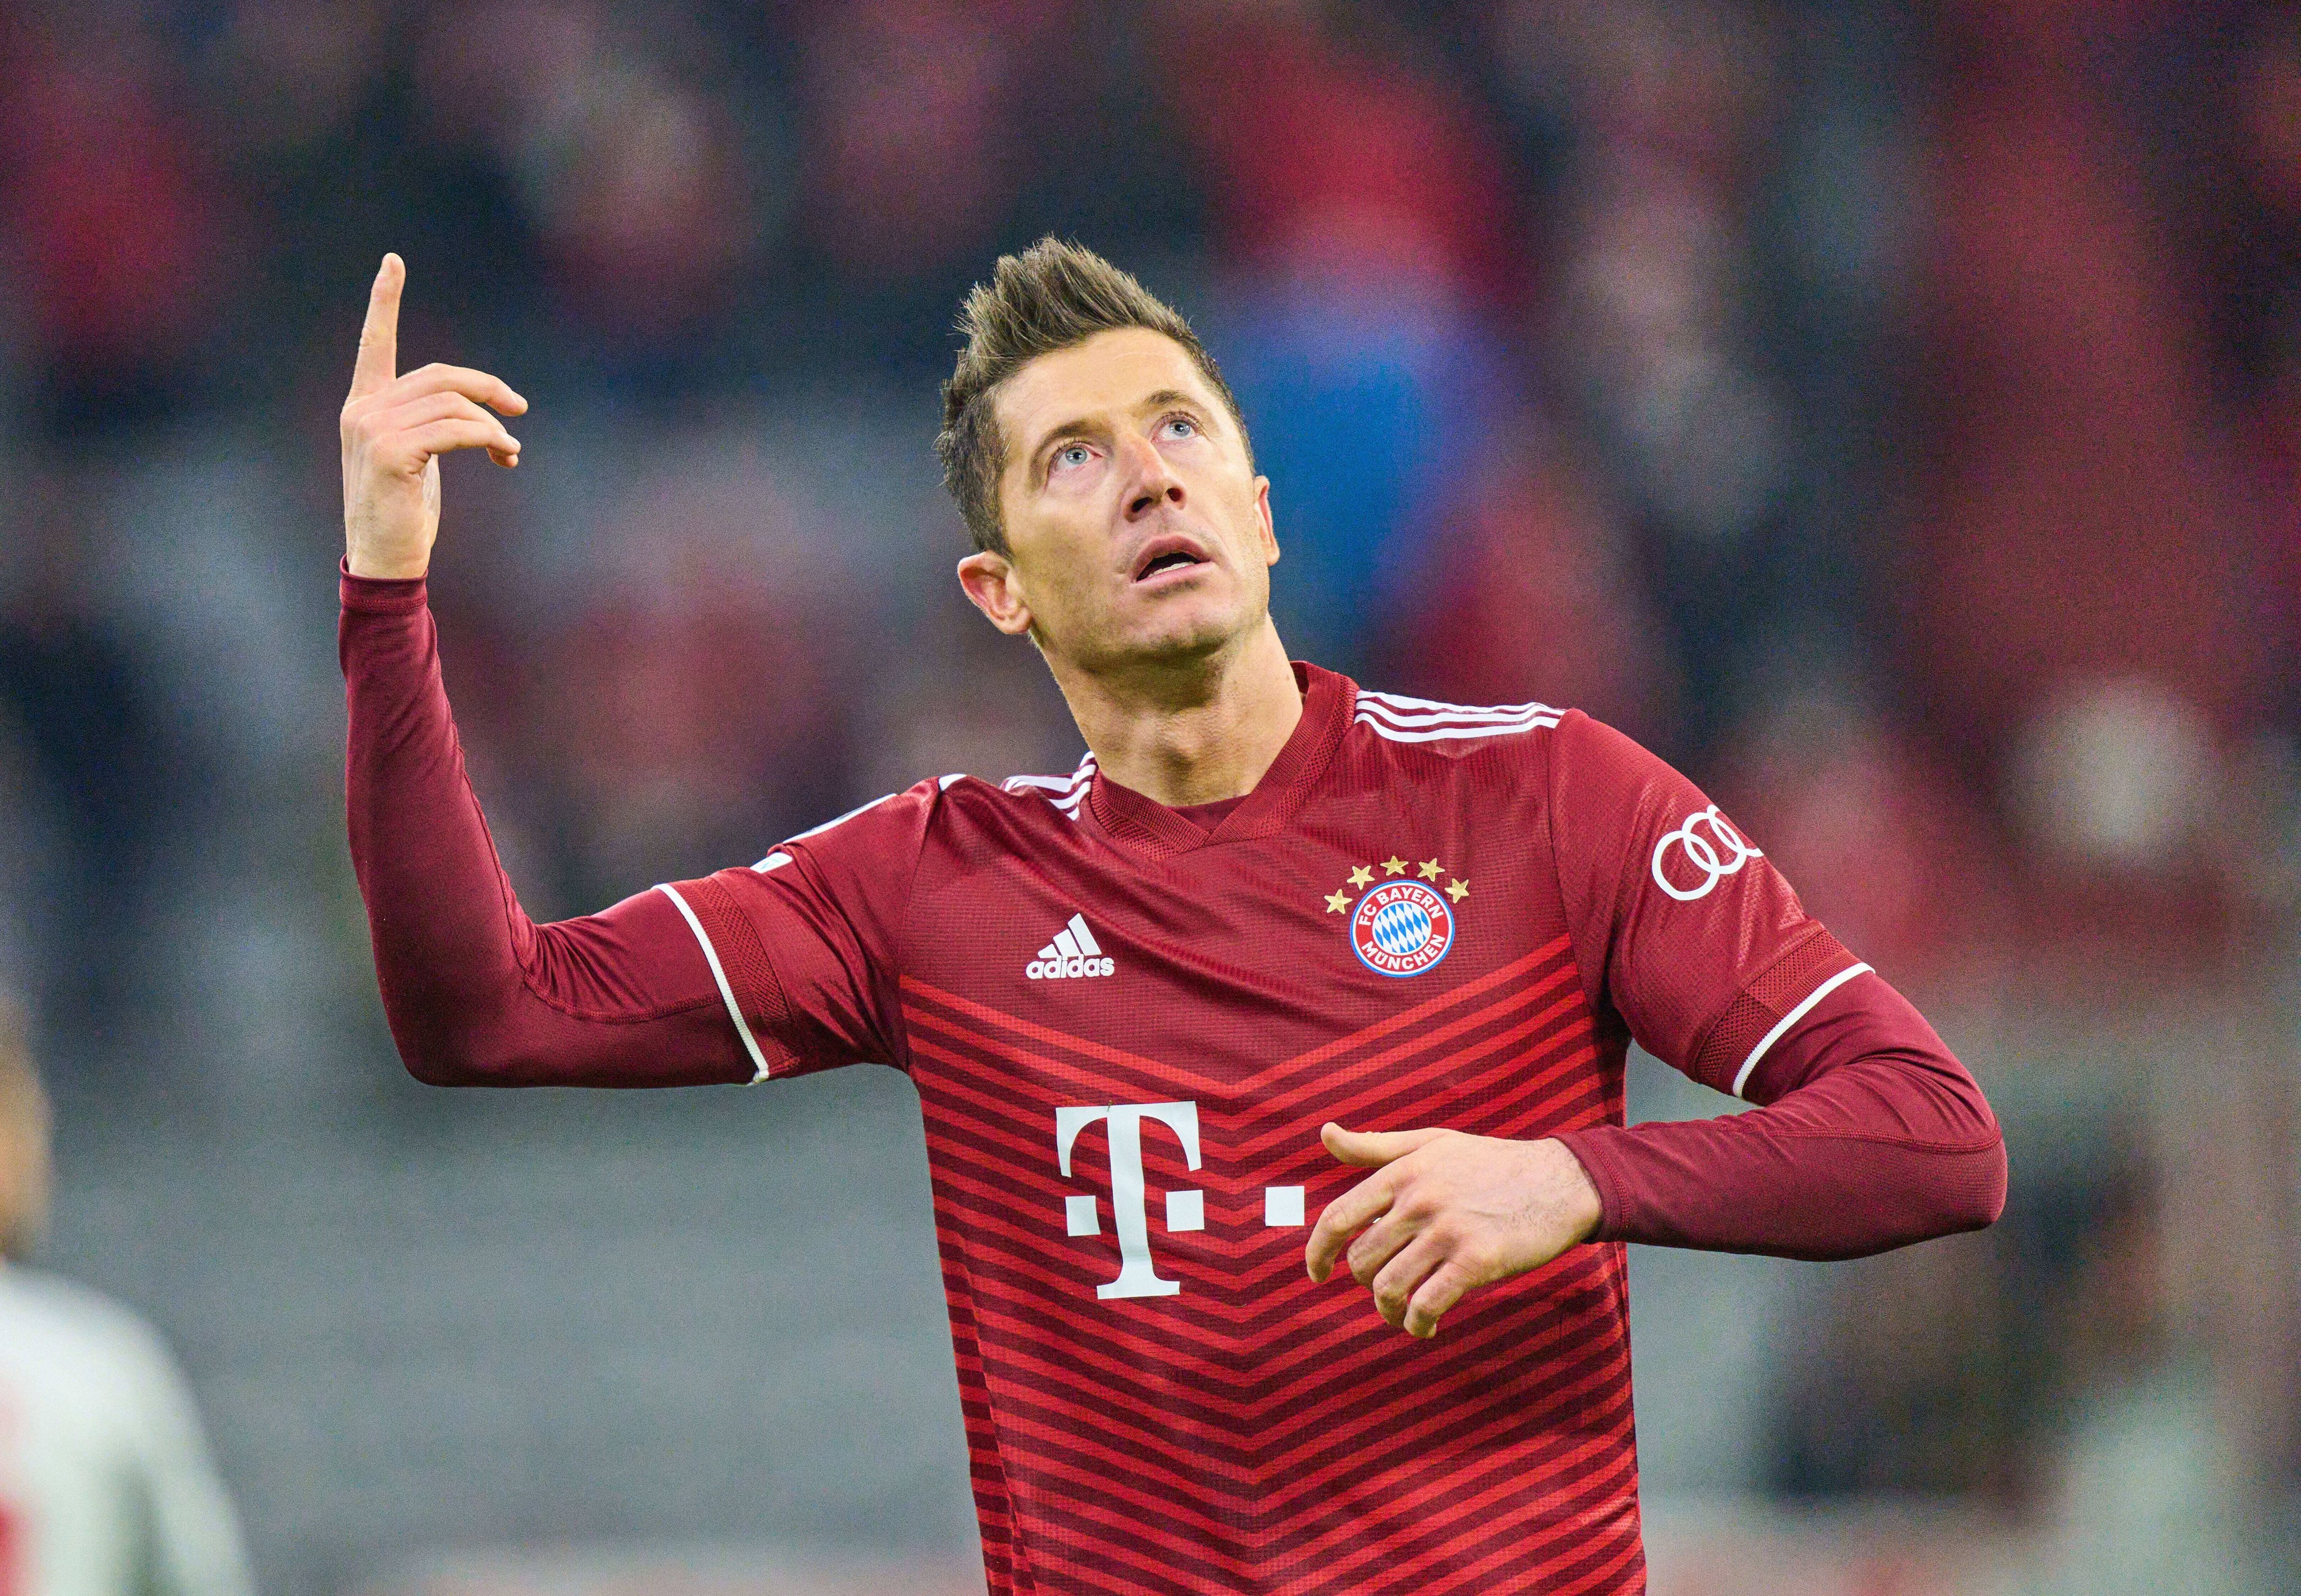 Bayern Munich 7-1 Salzburg Highlights: Robert Lewandowski scores 11-minute hat-trick as Bayern score seven goals to reach the Champions League quarterfinals